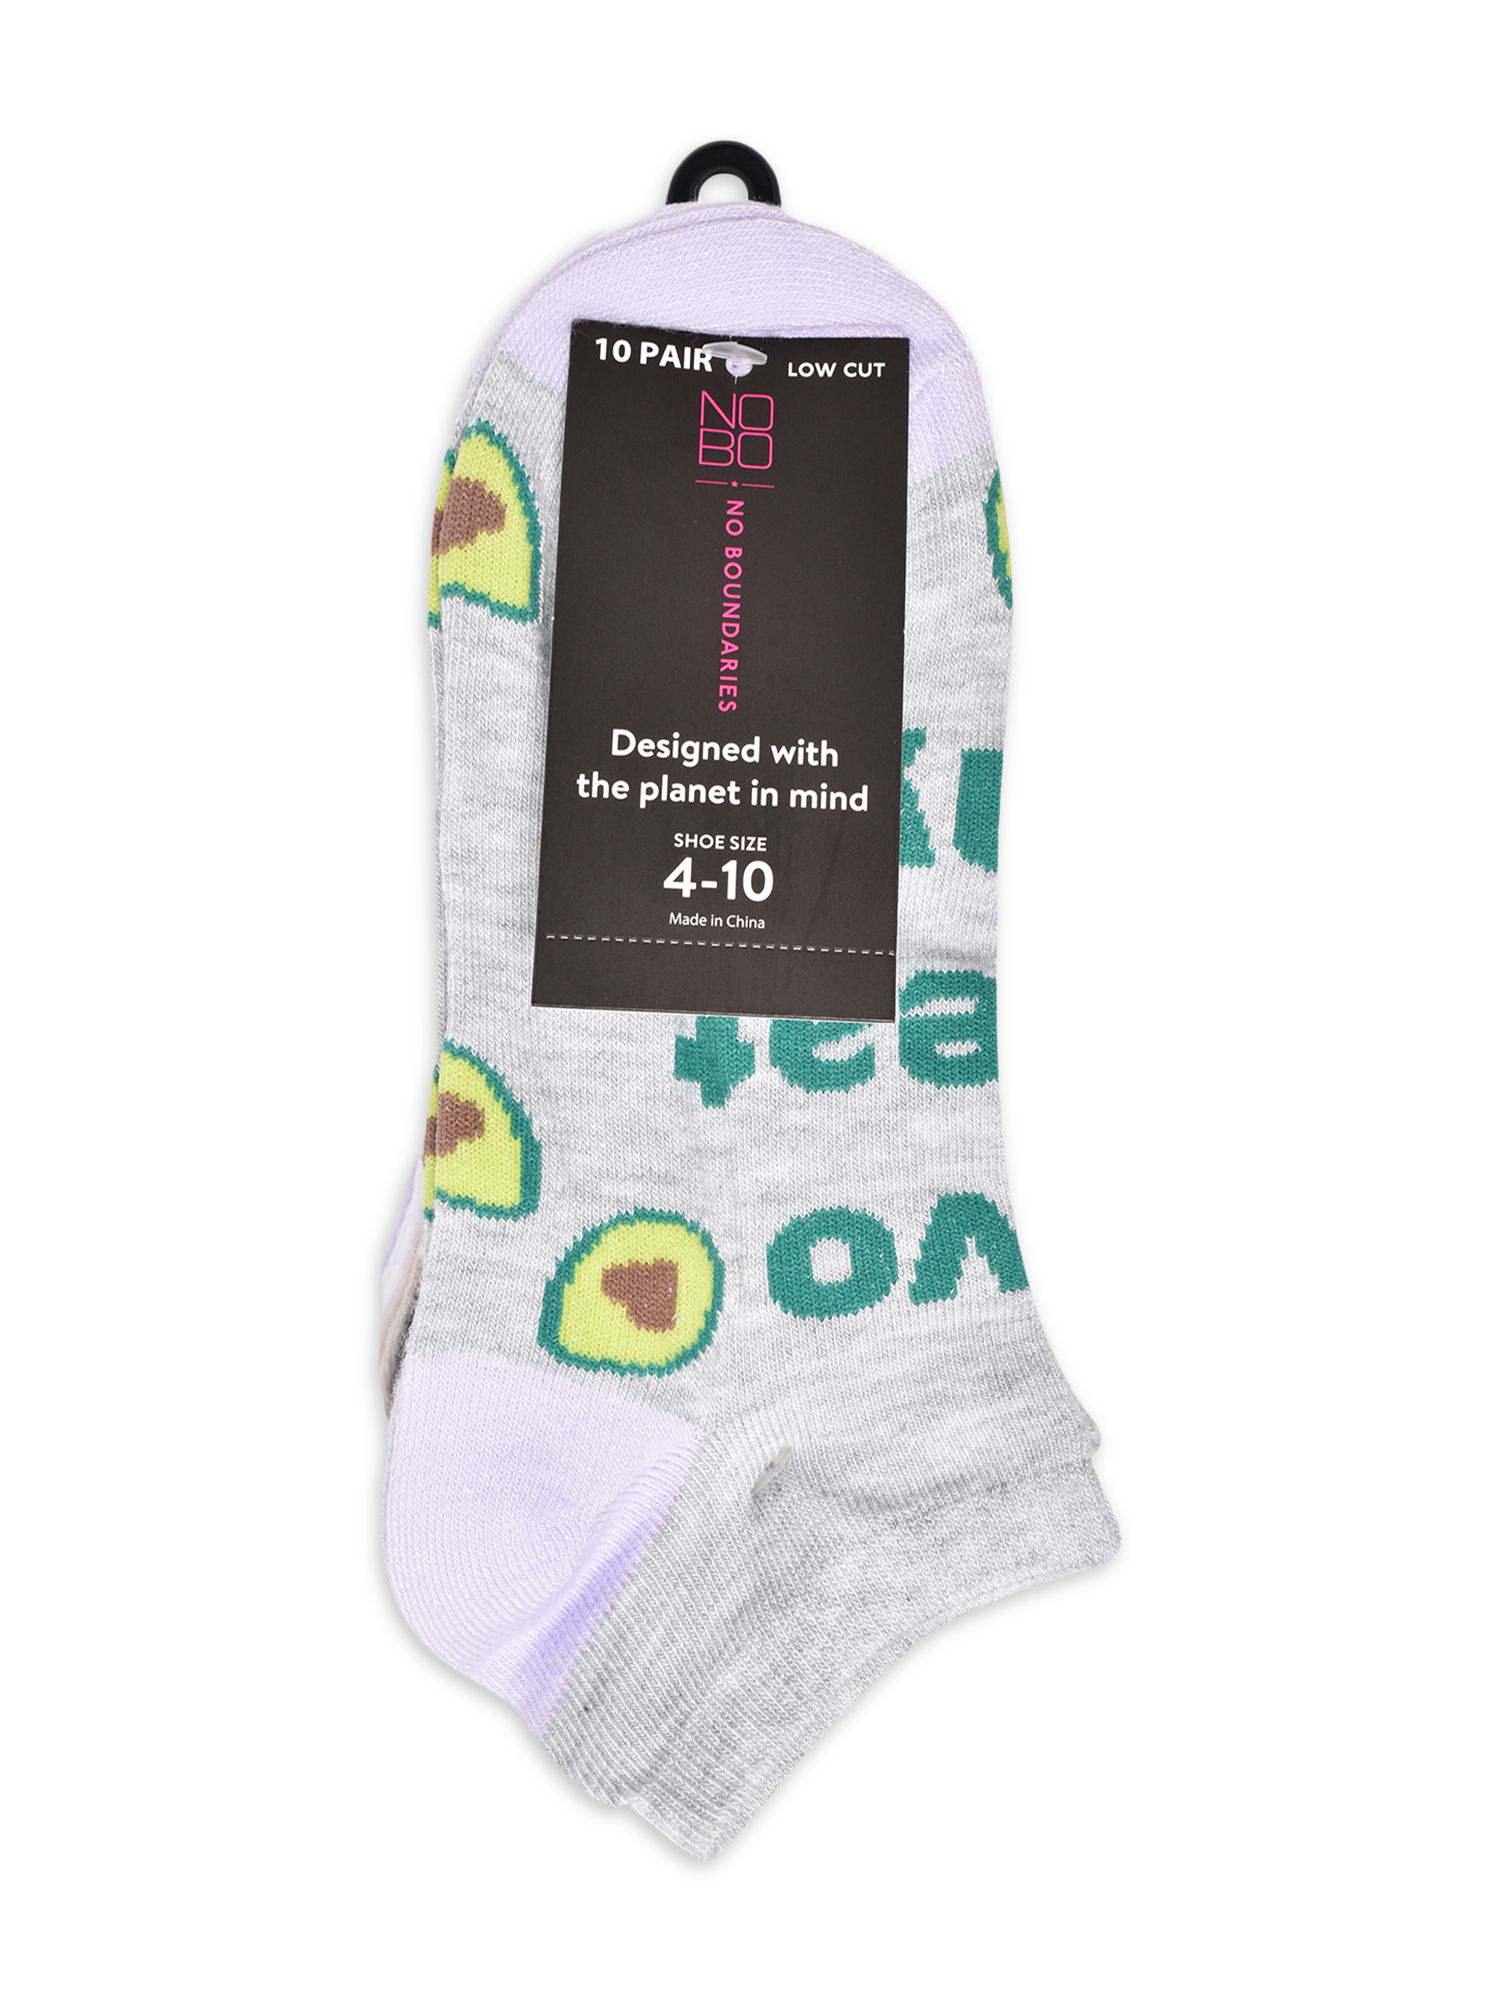 No Boundaries Women's Low-Cut Socks, 10-Pack, Sizes 4-10 - image 3 of 5